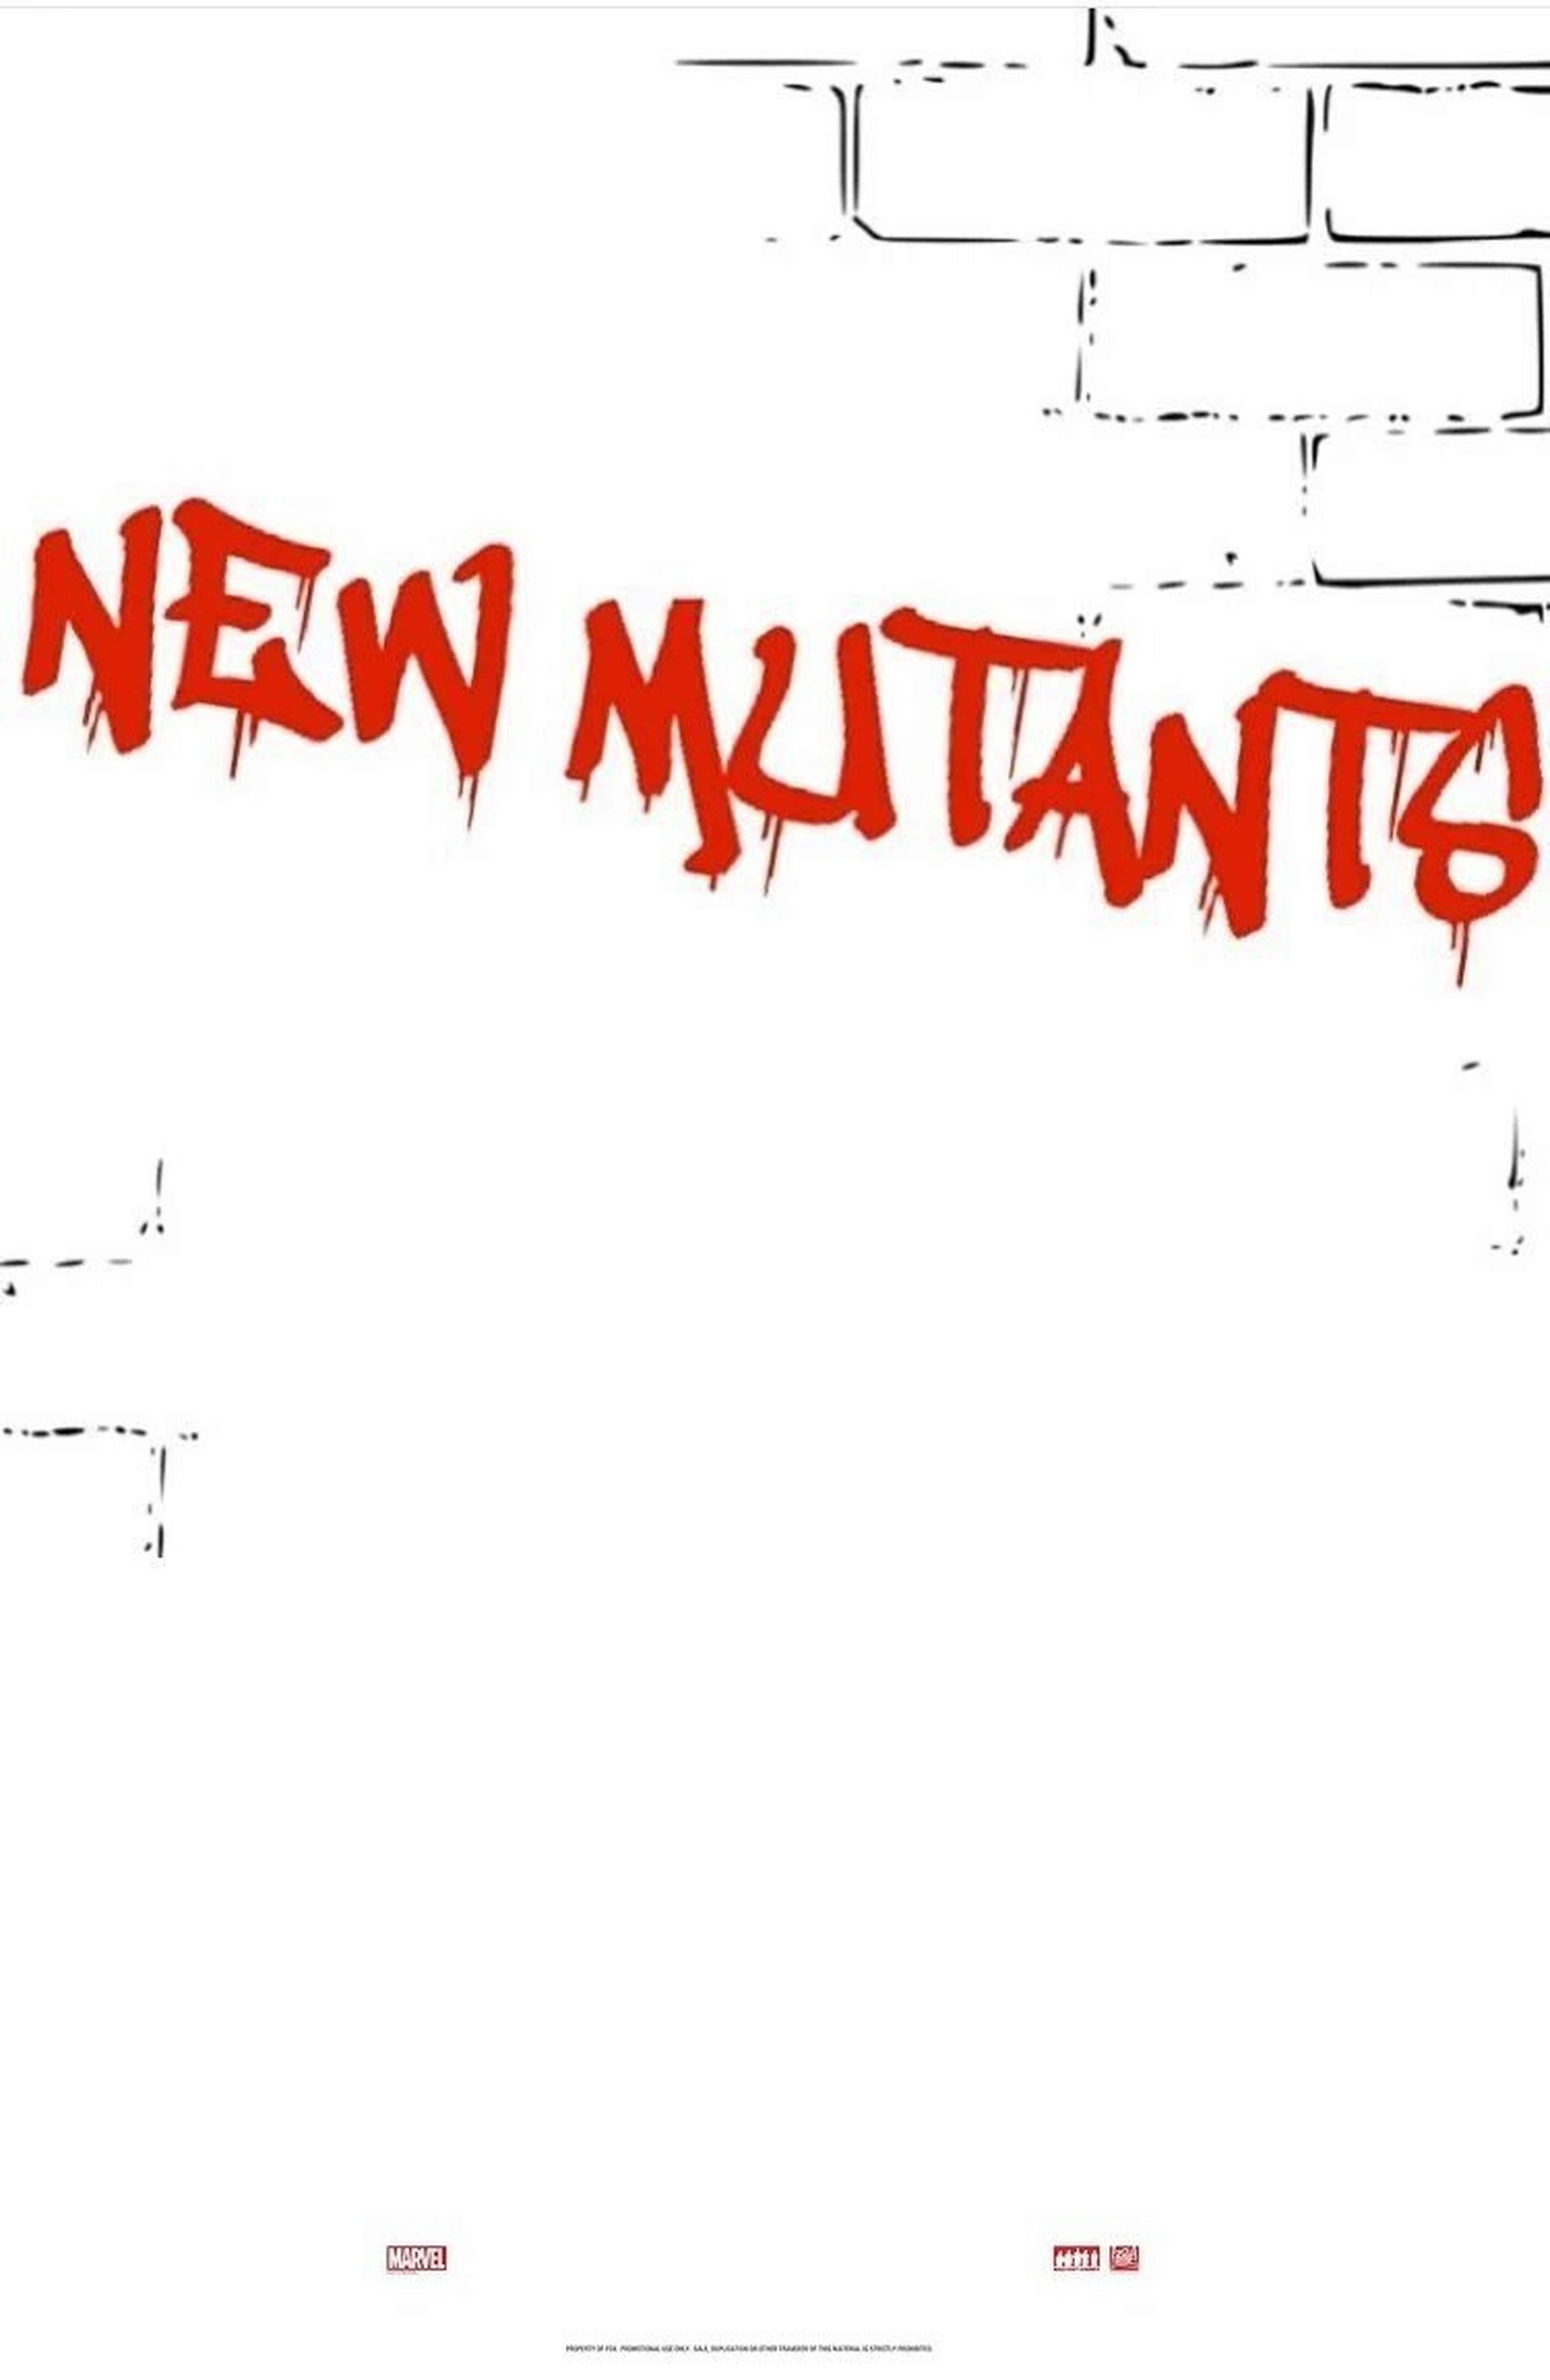 X-Men: The New Mutants